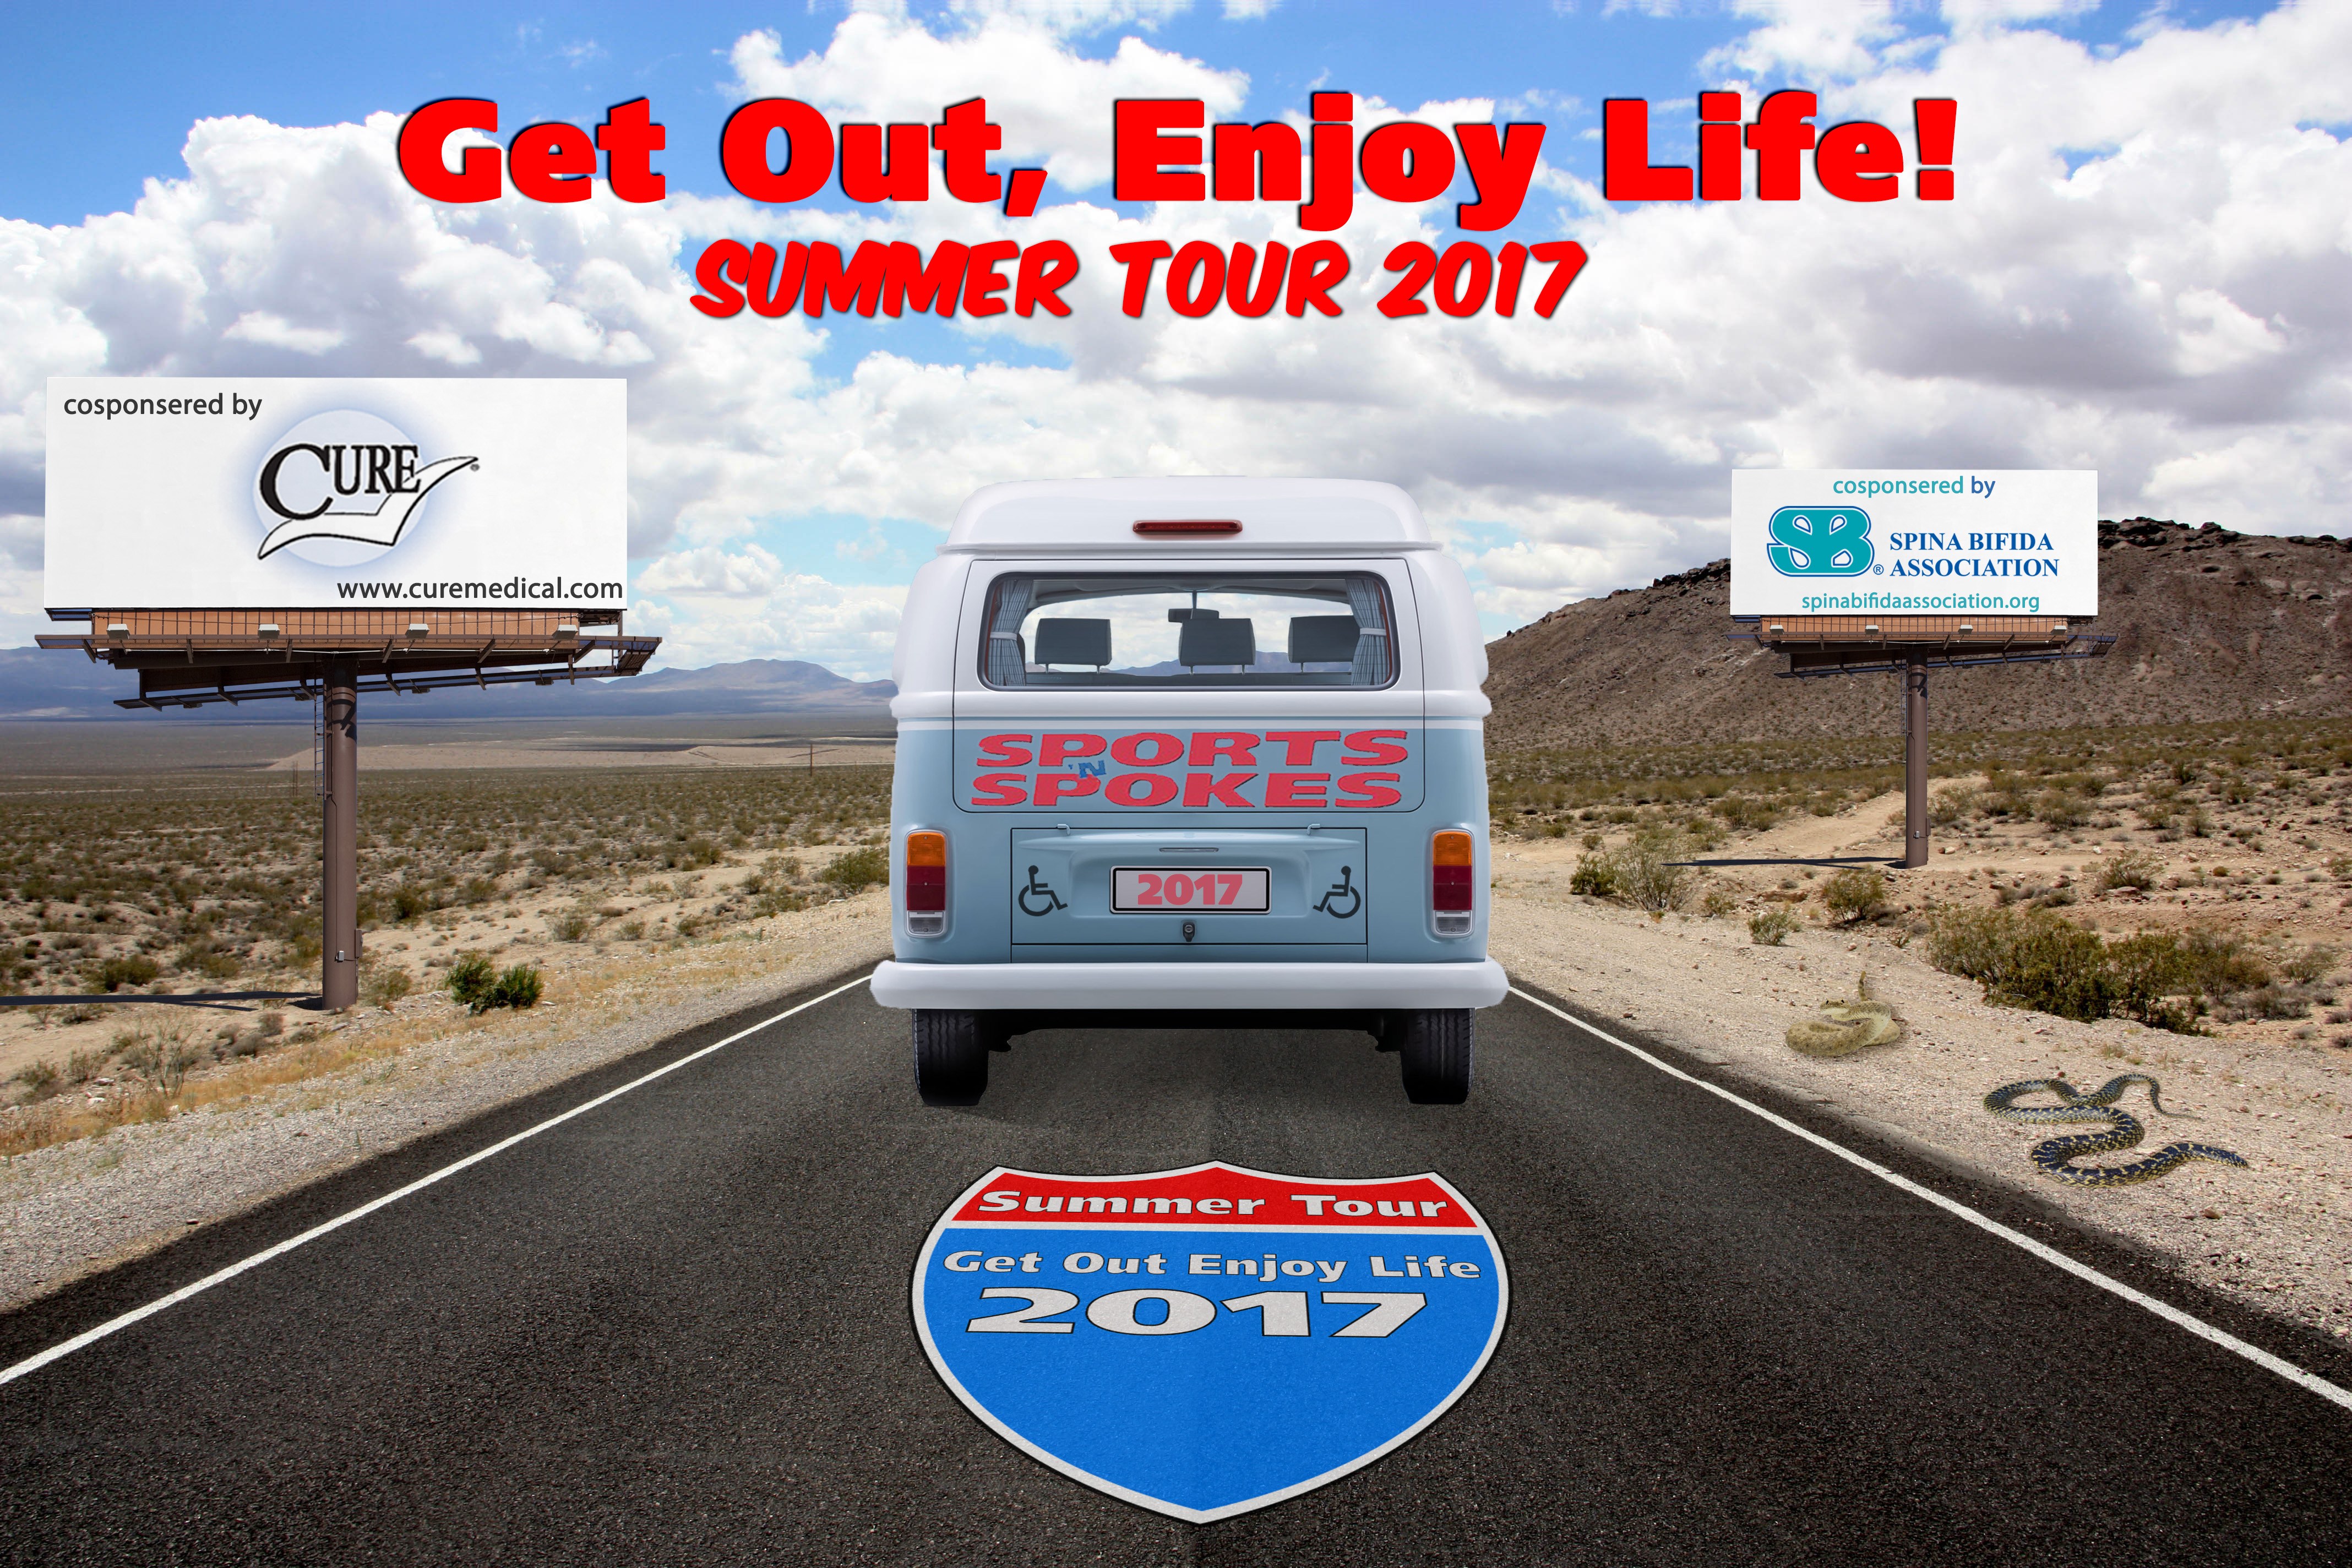 Get Out, Enjoy Life Summer Tour 2017 Flyer